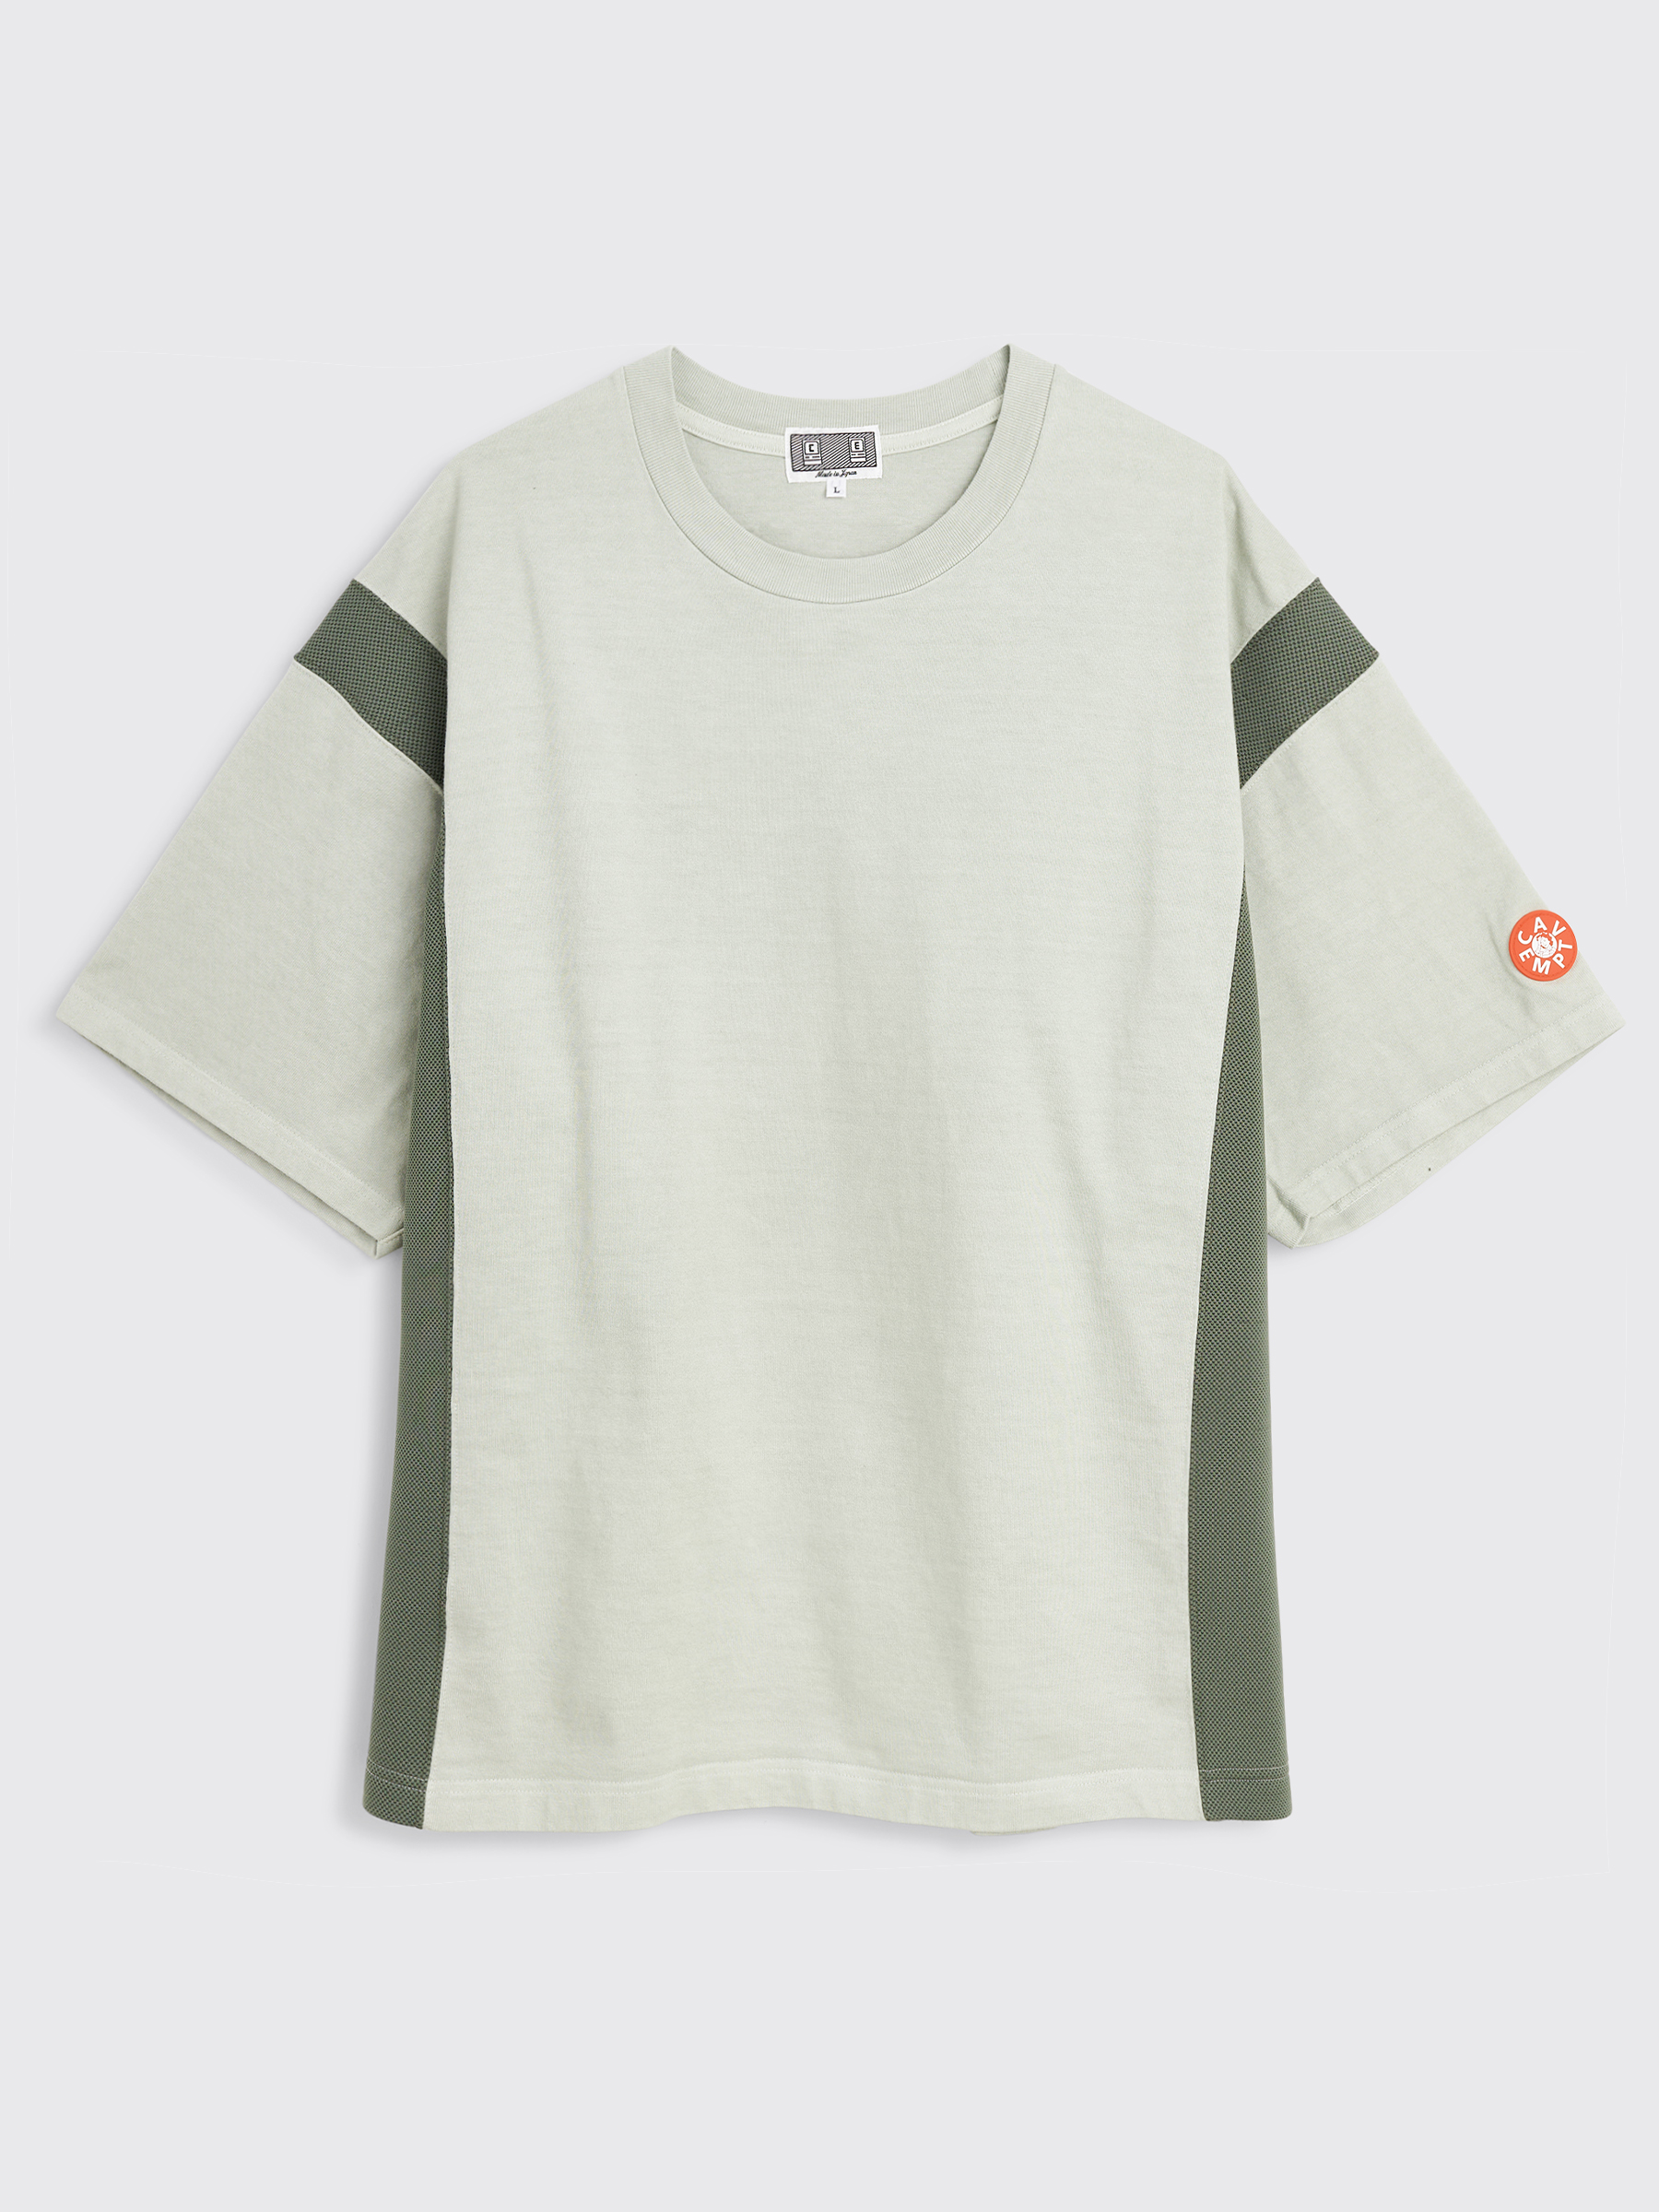 Très Bien - Knit T-shirt Side Cav Grey Overdye Big Empt D